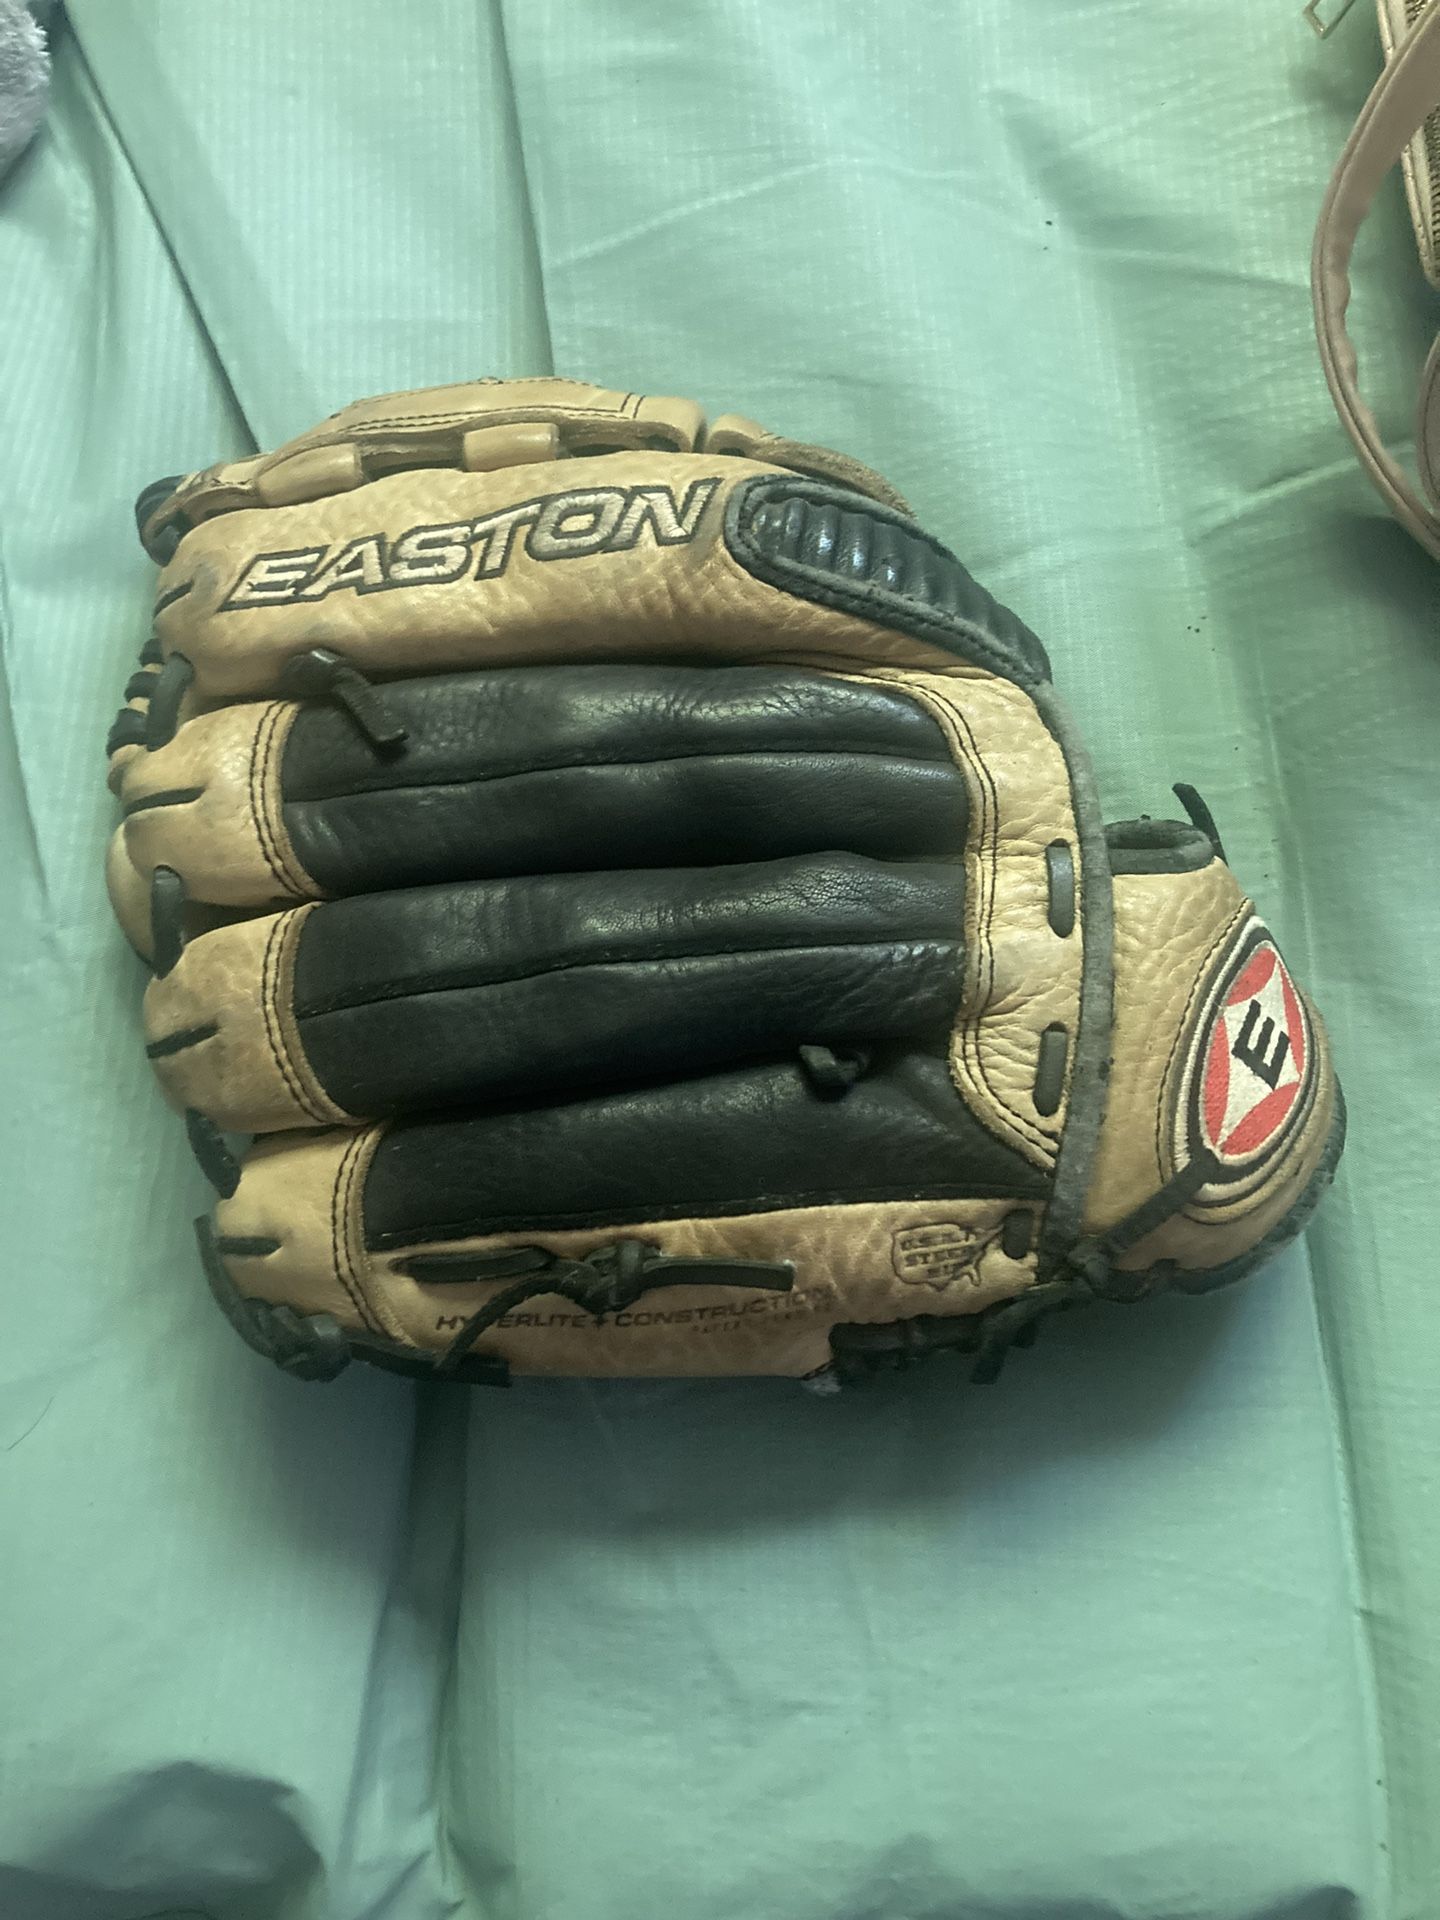 Easton Baseball Glove